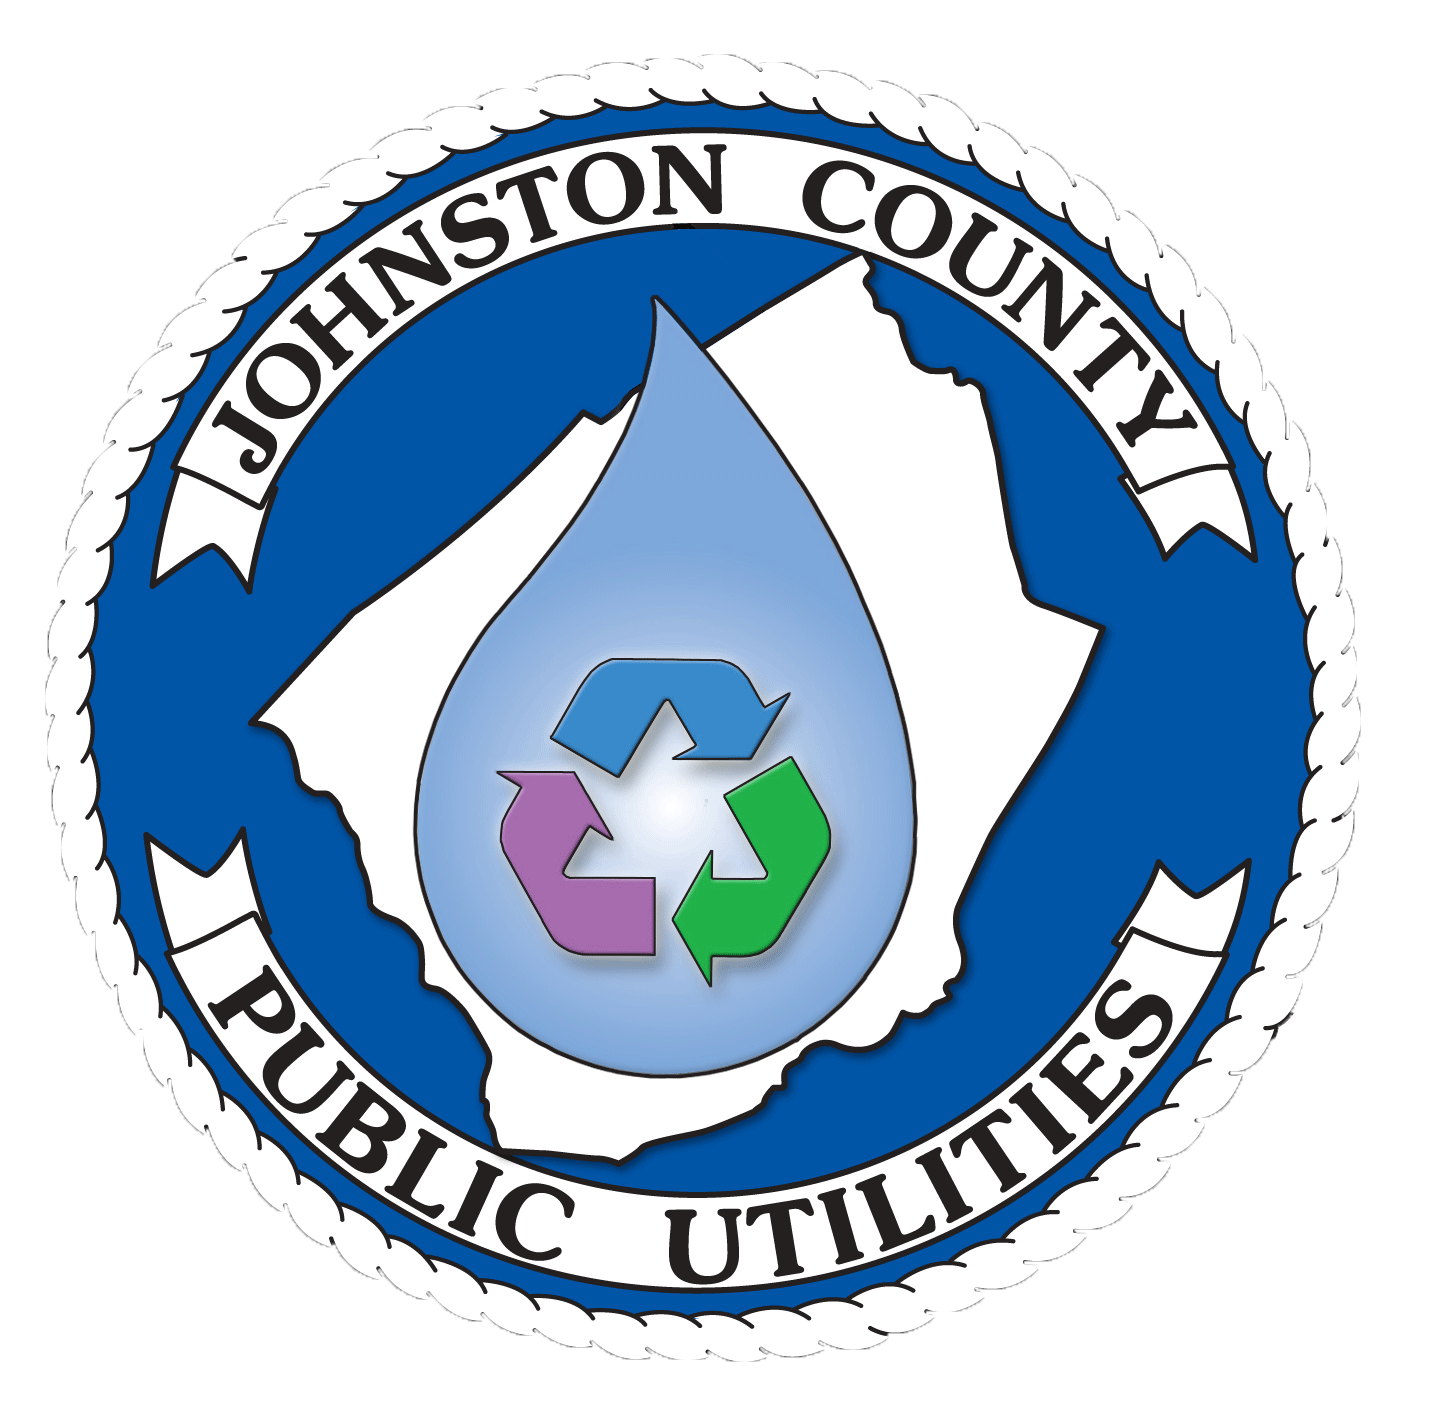 Utilities Logo - Johnston County Public Utilities